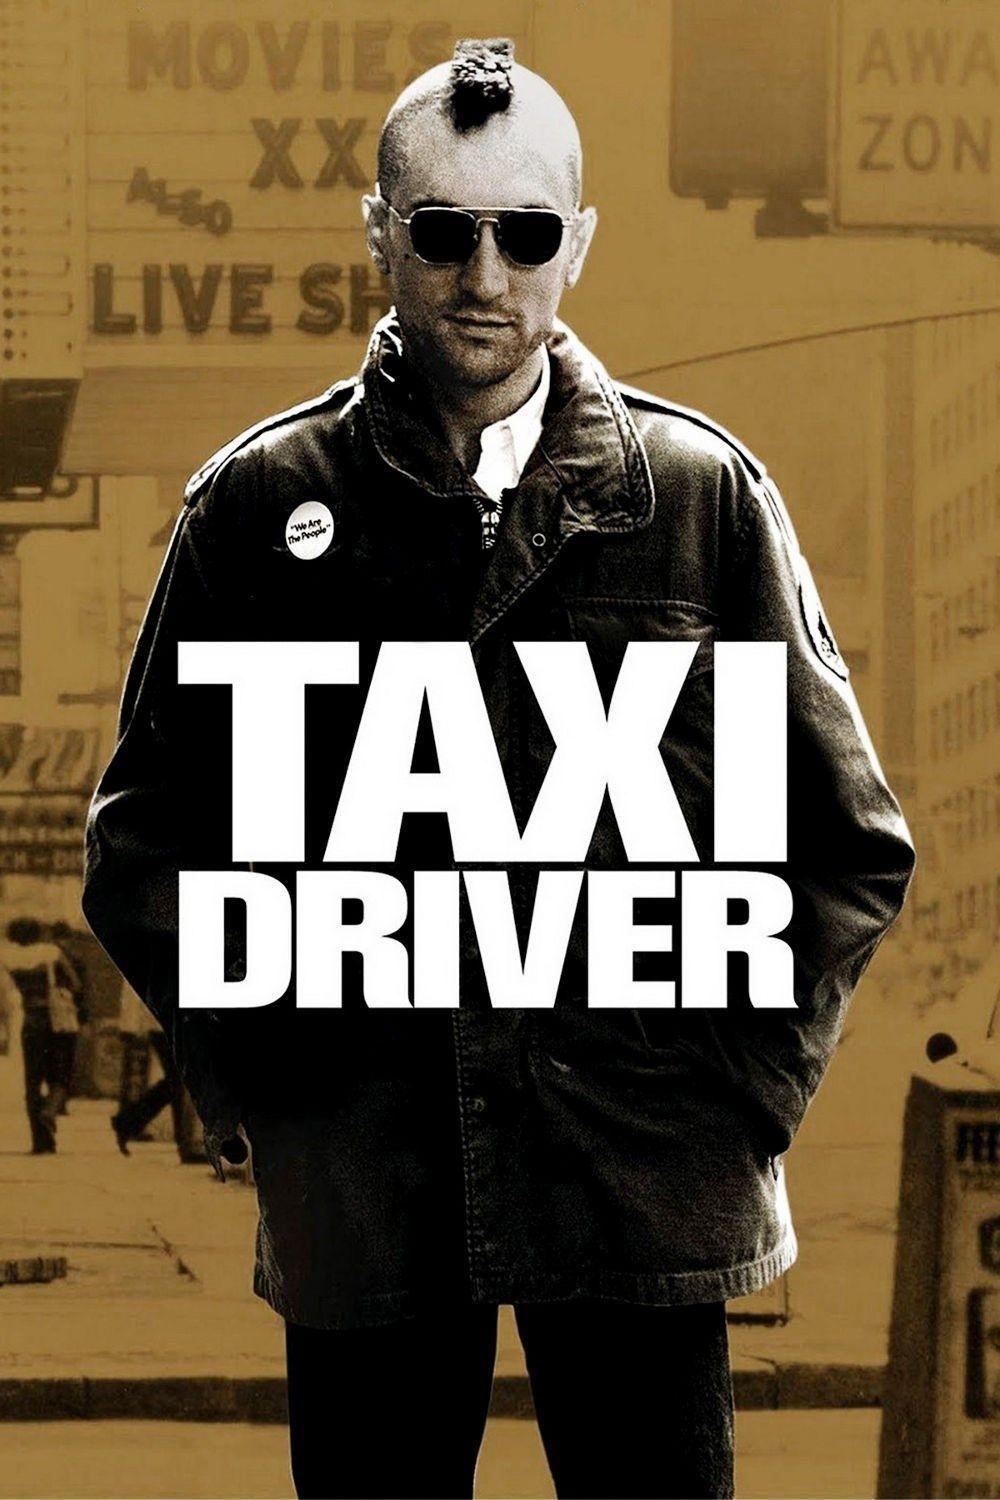 960x728px Taxi Driver 171.72 KB